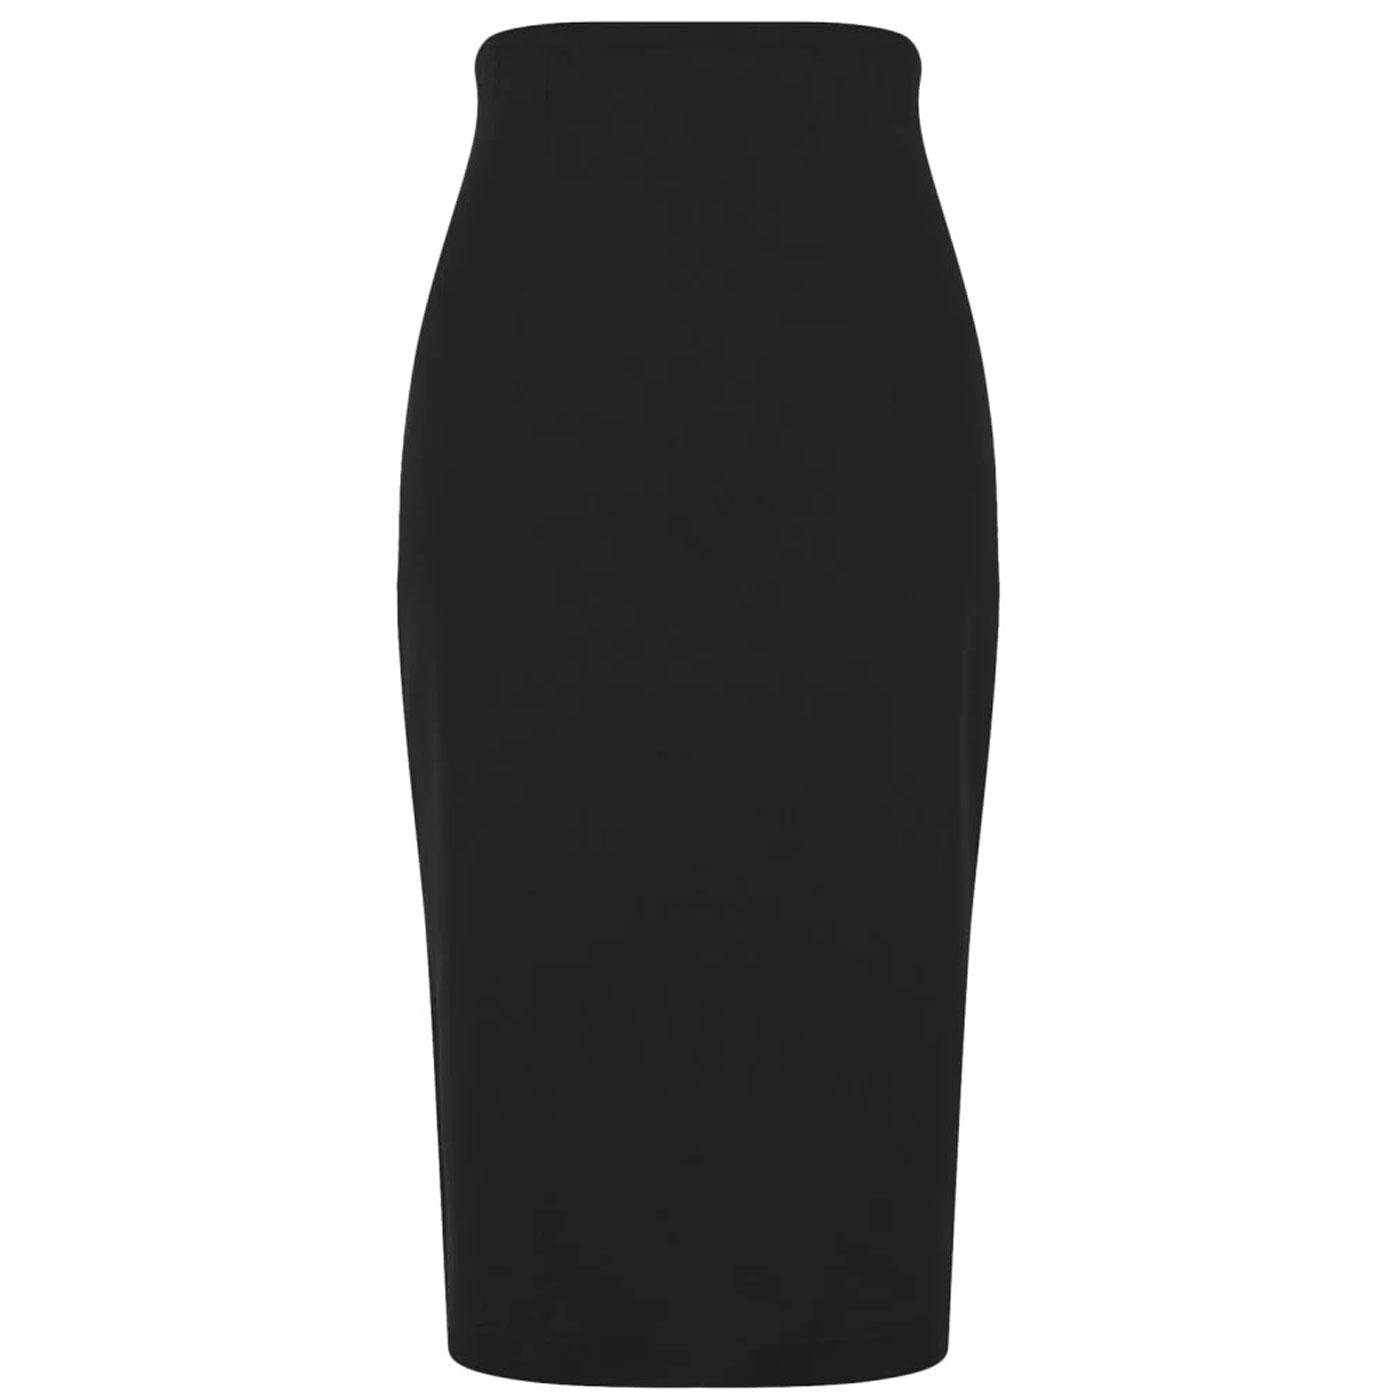 Fiona COLLECTIF Retro 50s Pencil Skirt in Black